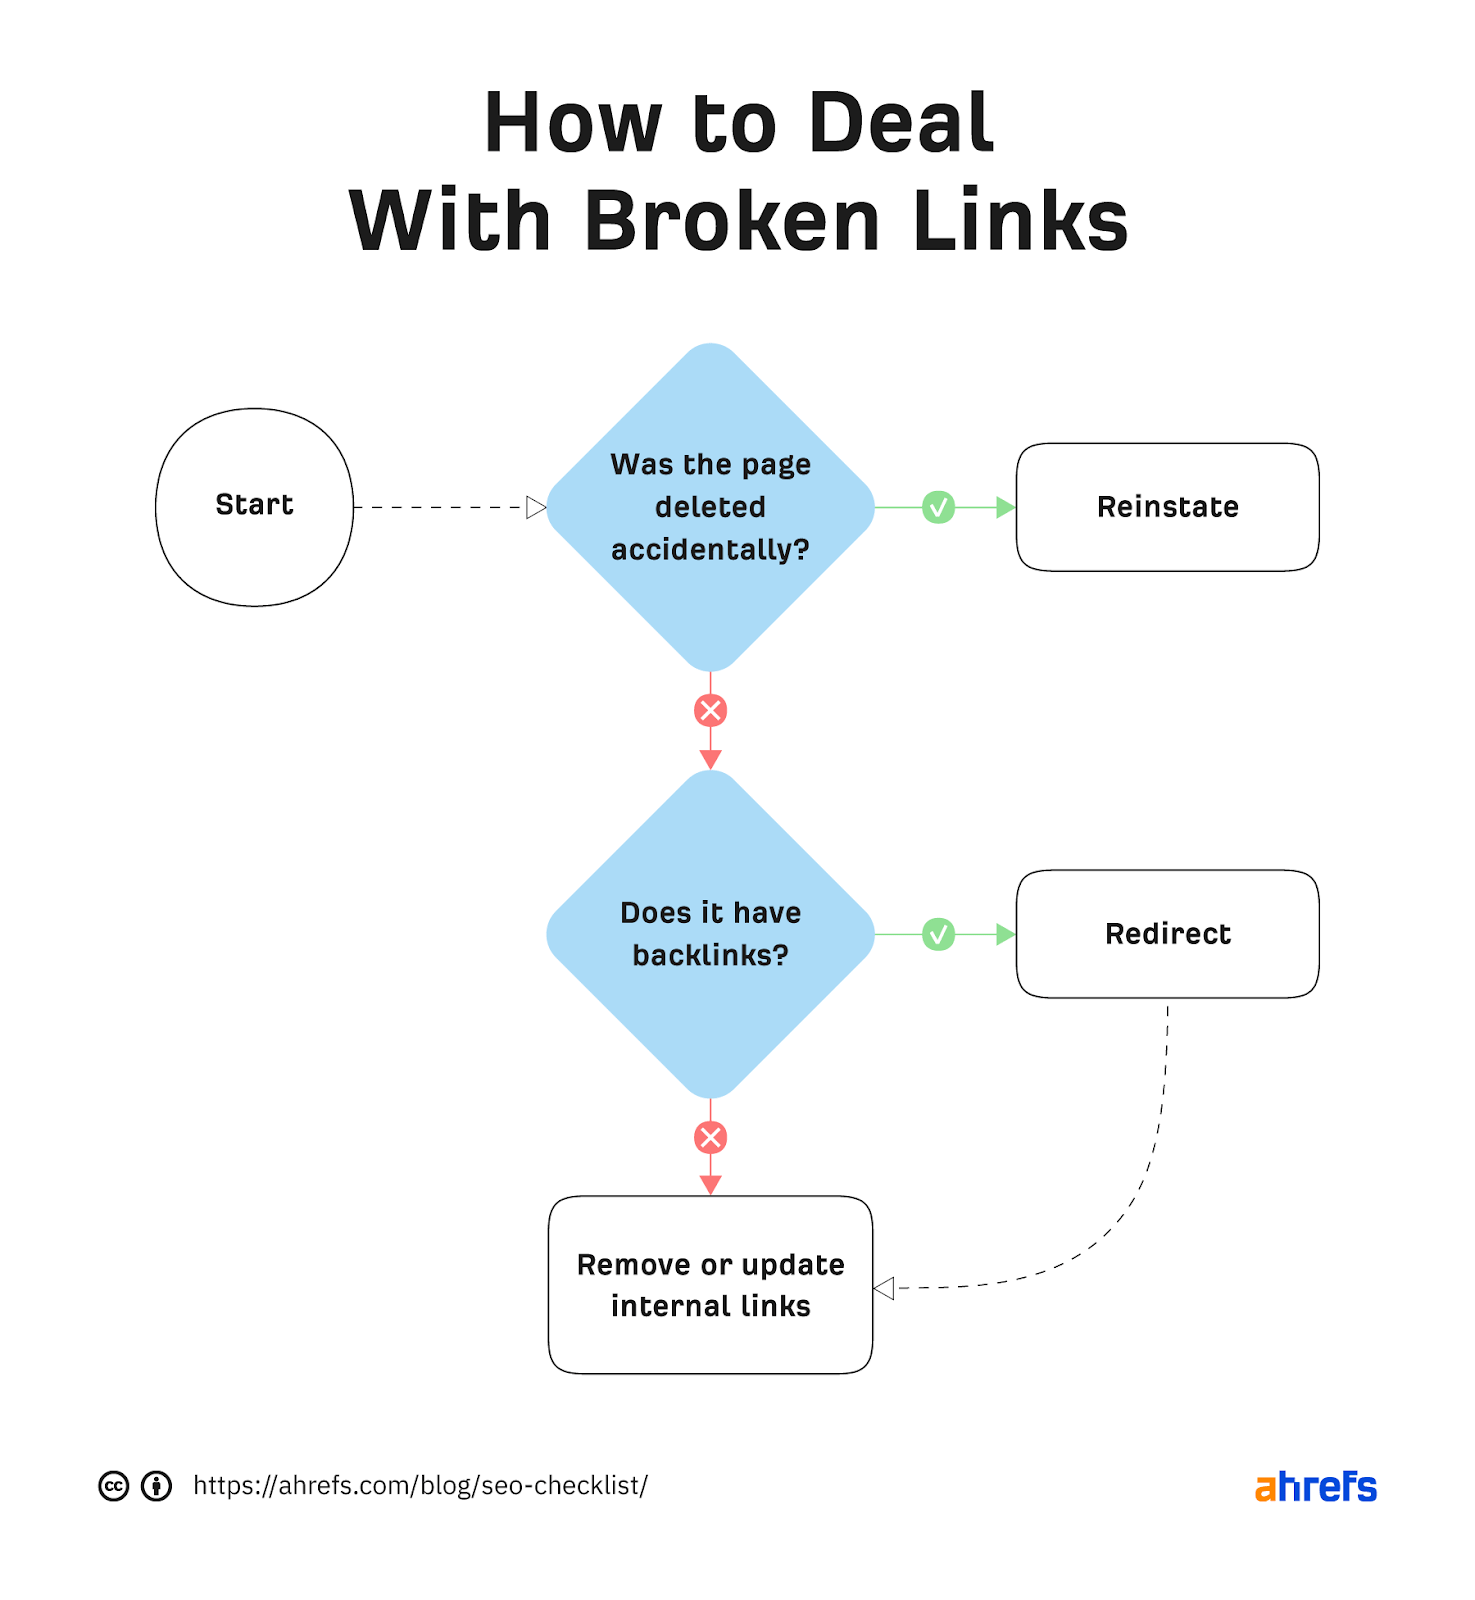 How to deal with broken links
